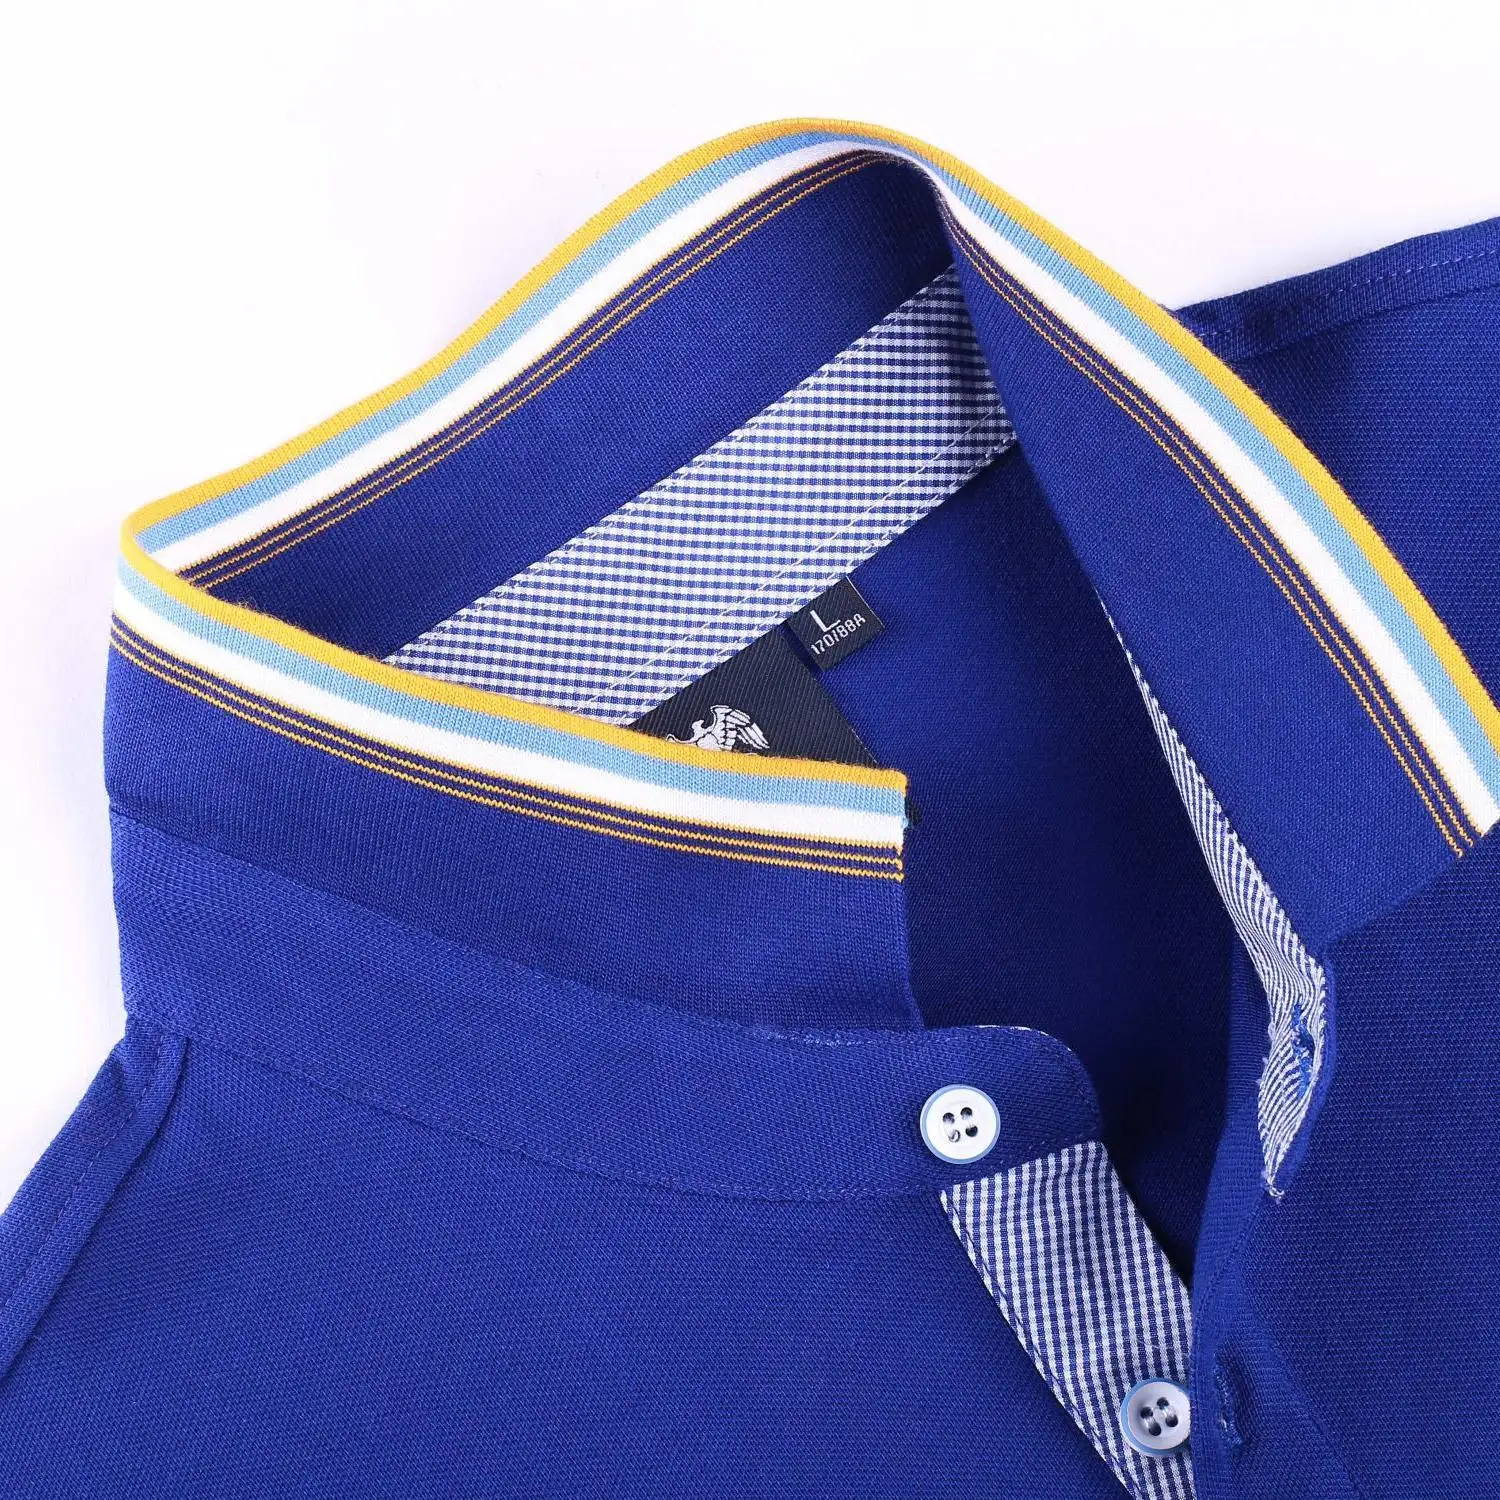 Wholesaler sports polo shirt, cotton men's polo shirt, Custom Embroidered golf shirt